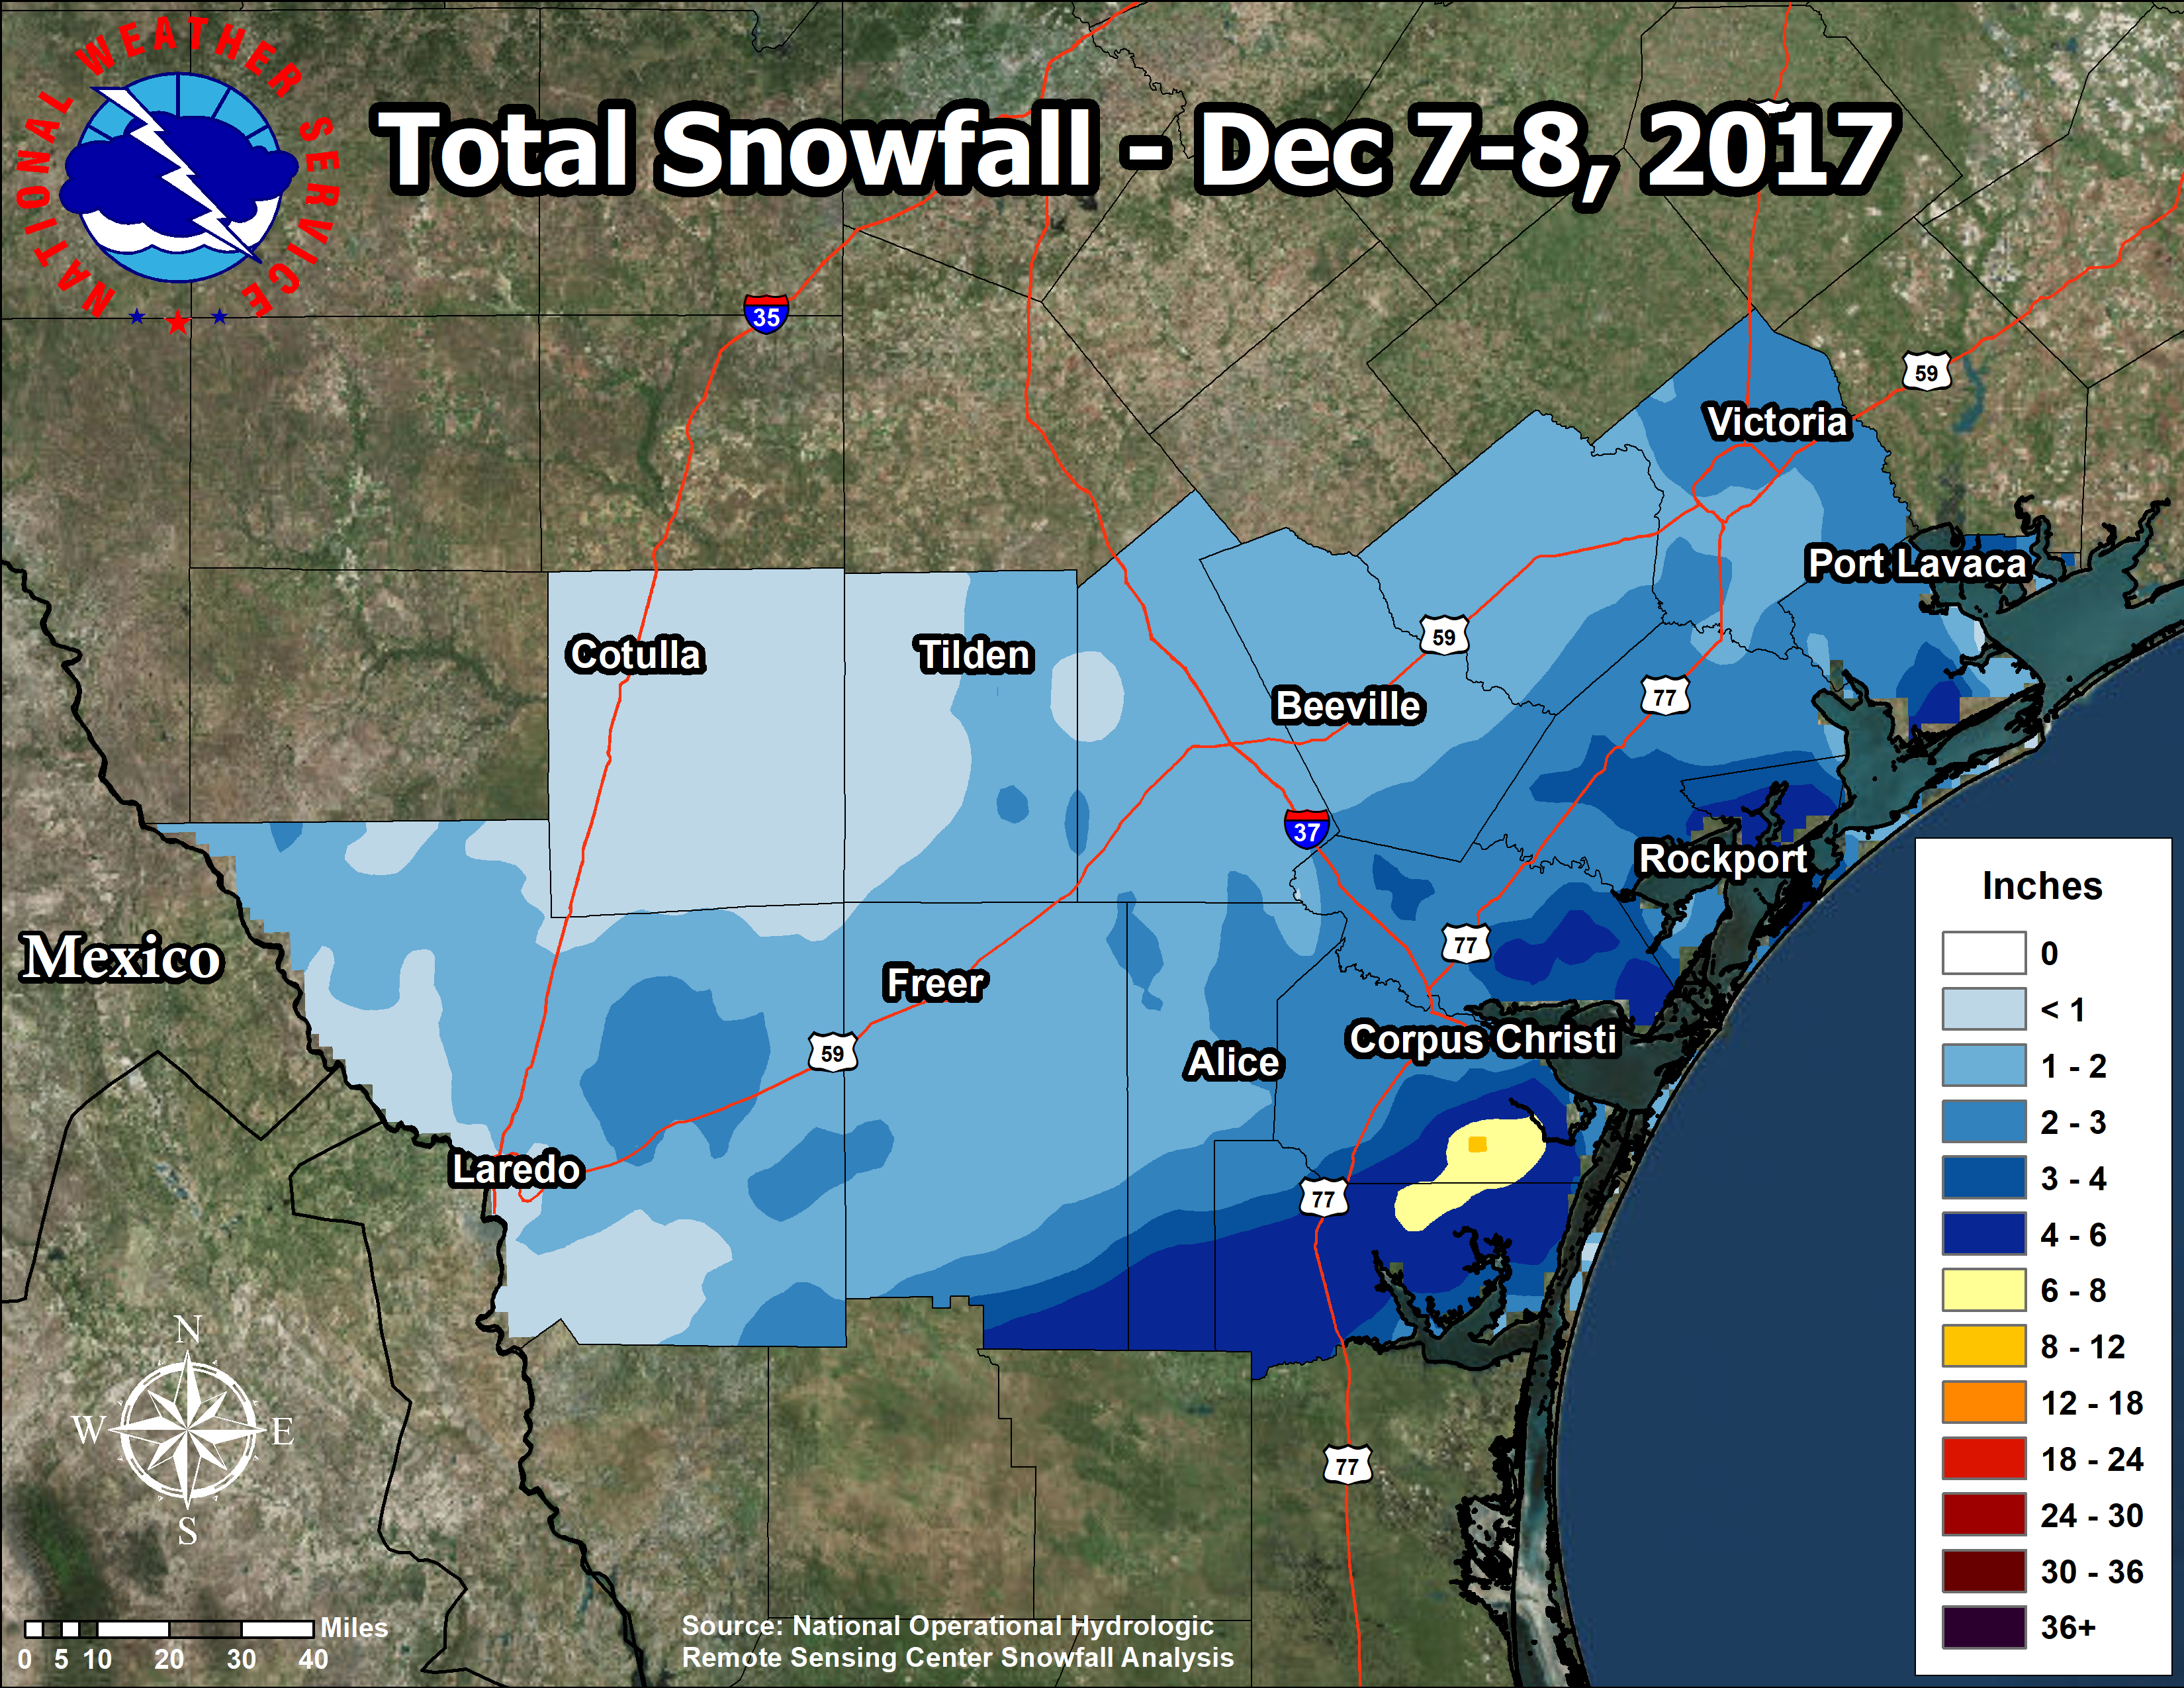 South Texas Snowstorm - December 7-8, 2017